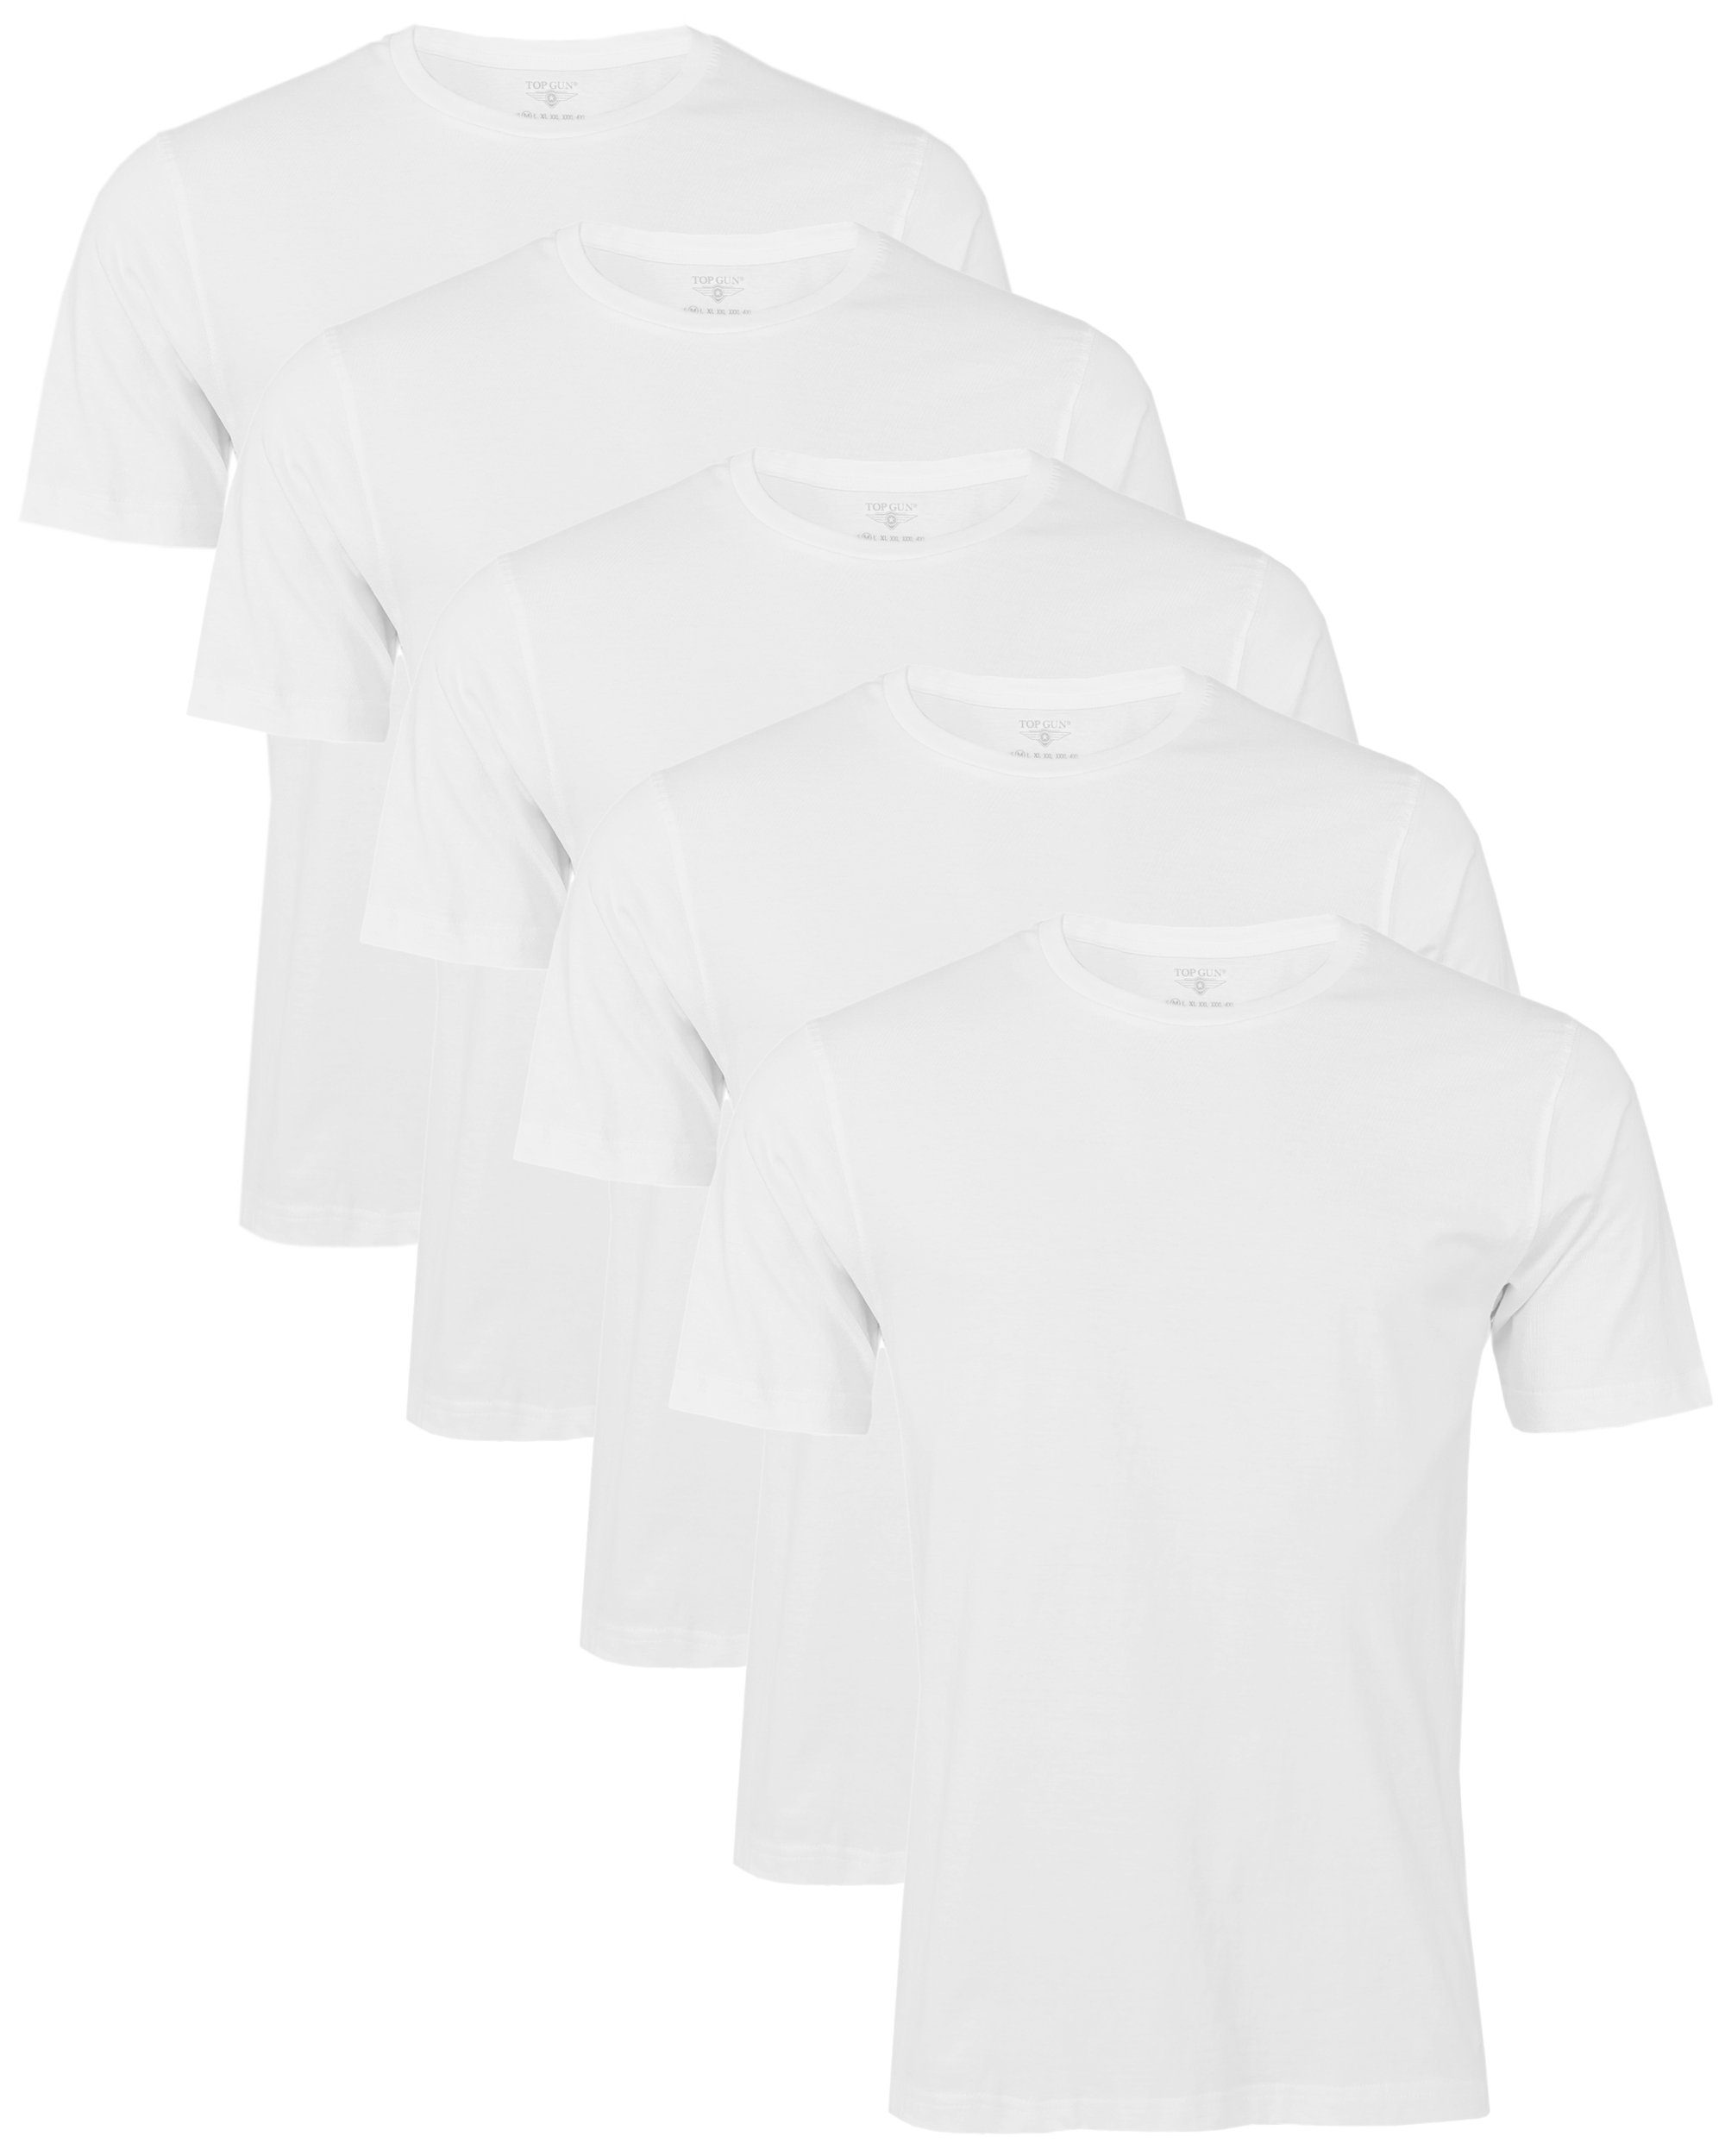 white TOP T-Shirt TG20213030 GUN